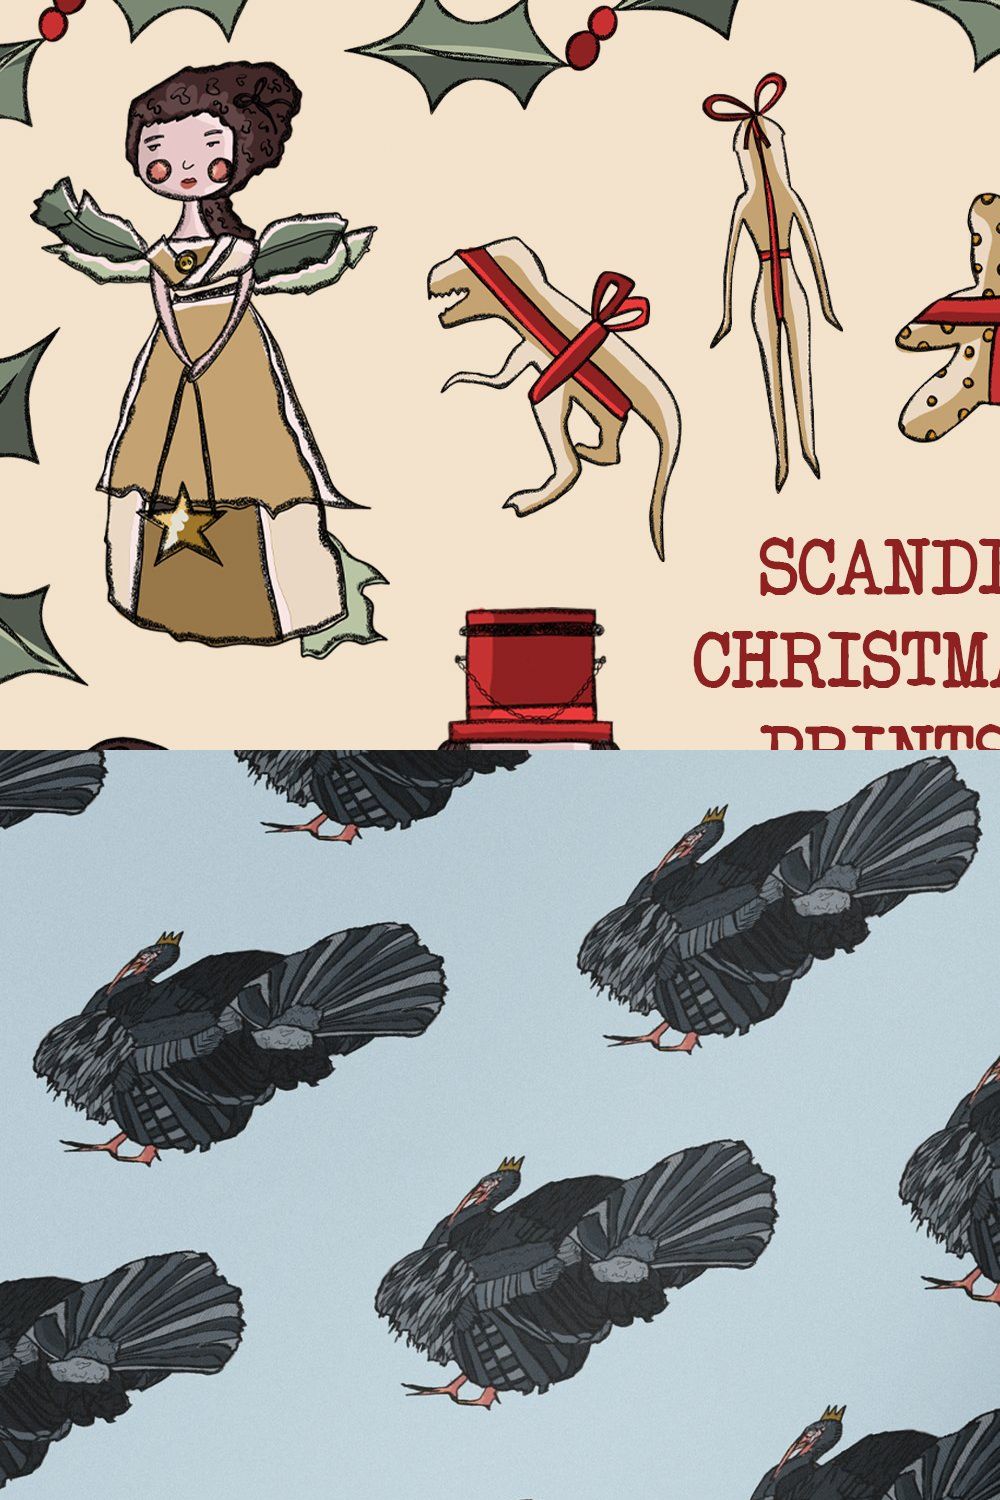 Scandi Christmas Illustrations pinterest preview image.